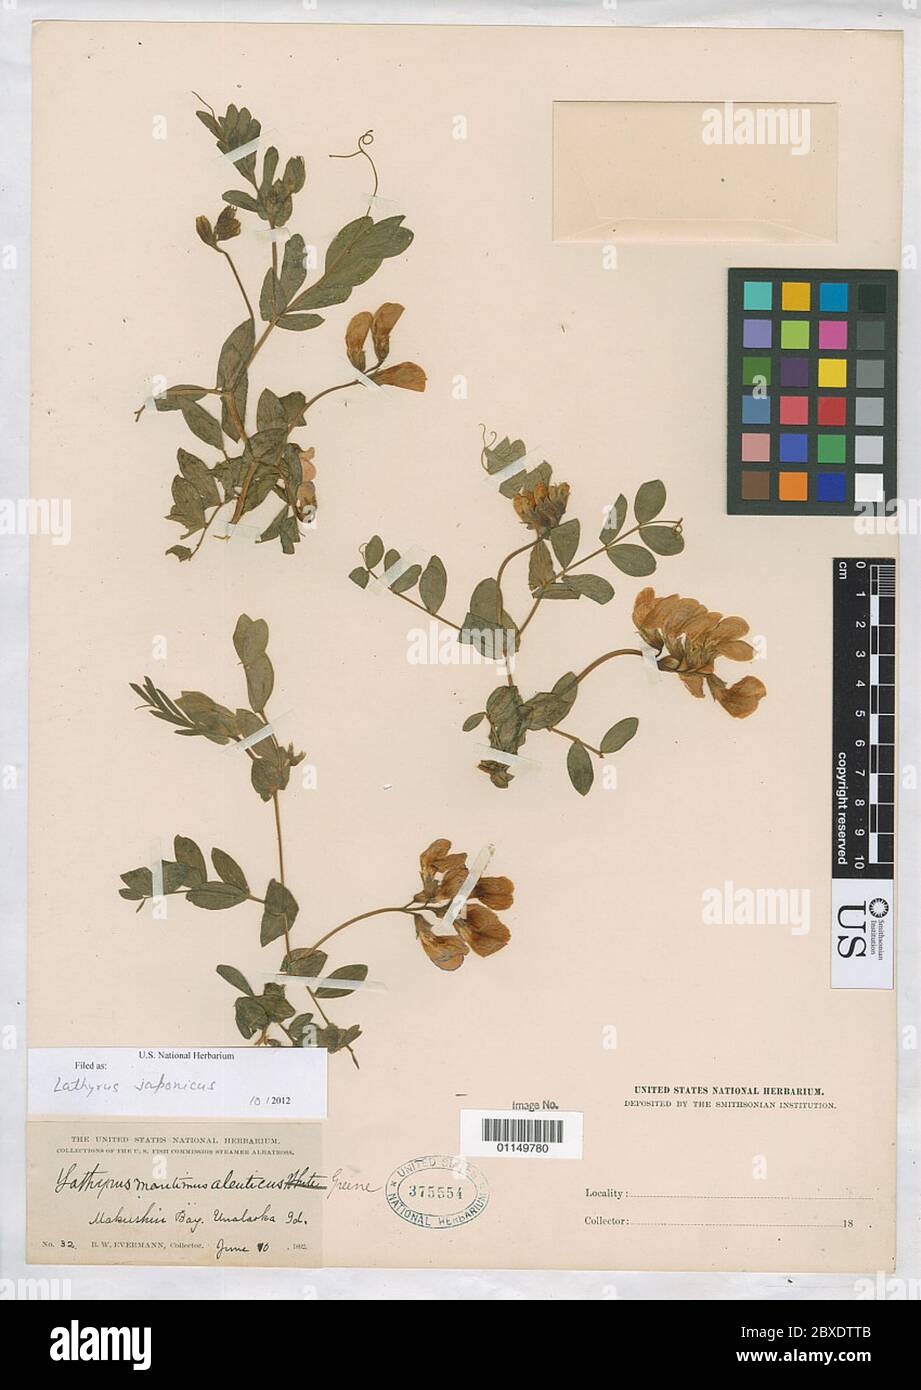 Lathyrus japonicus Willd Lathyrus japonicus Willd. Stock Photo